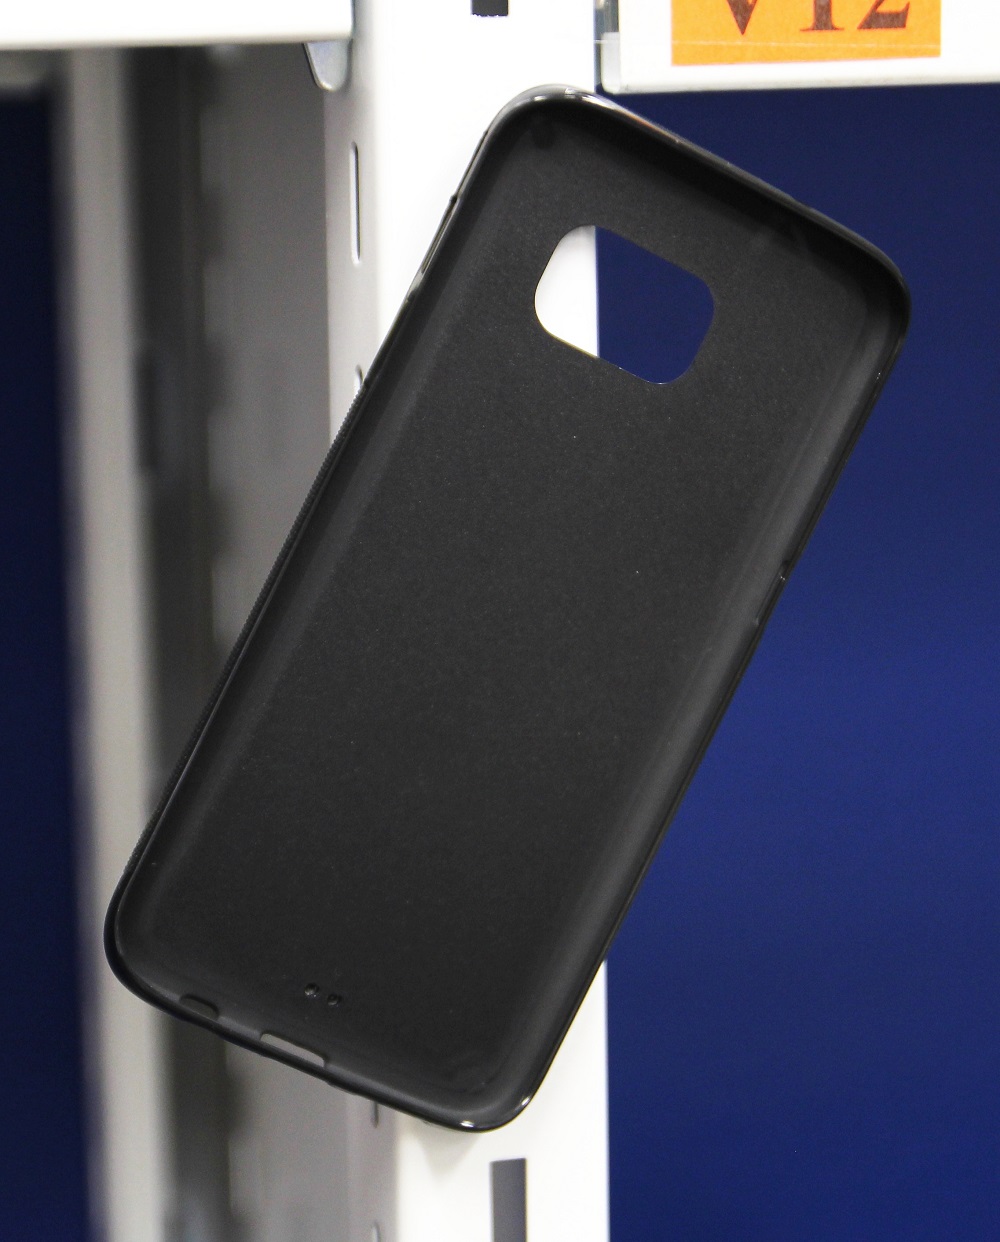 Skimblocker Magnet Wallet Samsung Galaxy S7 Edge (G935F)